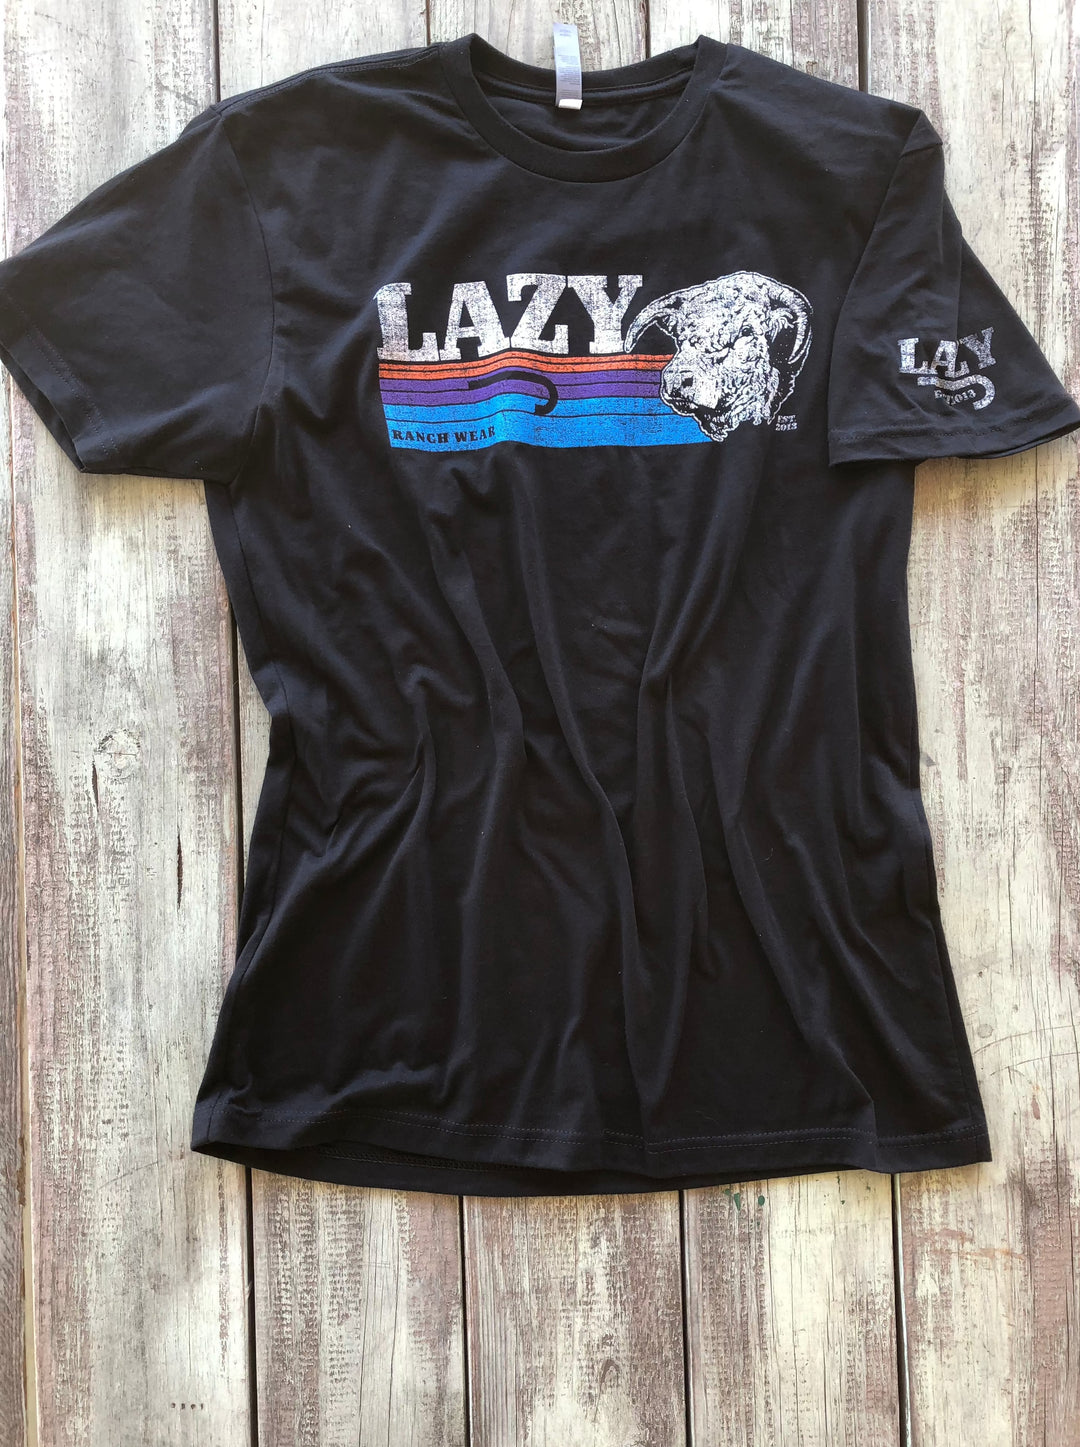 Lazy J Ranch Wear Sunset Short Sleeve T-Shirt - Black